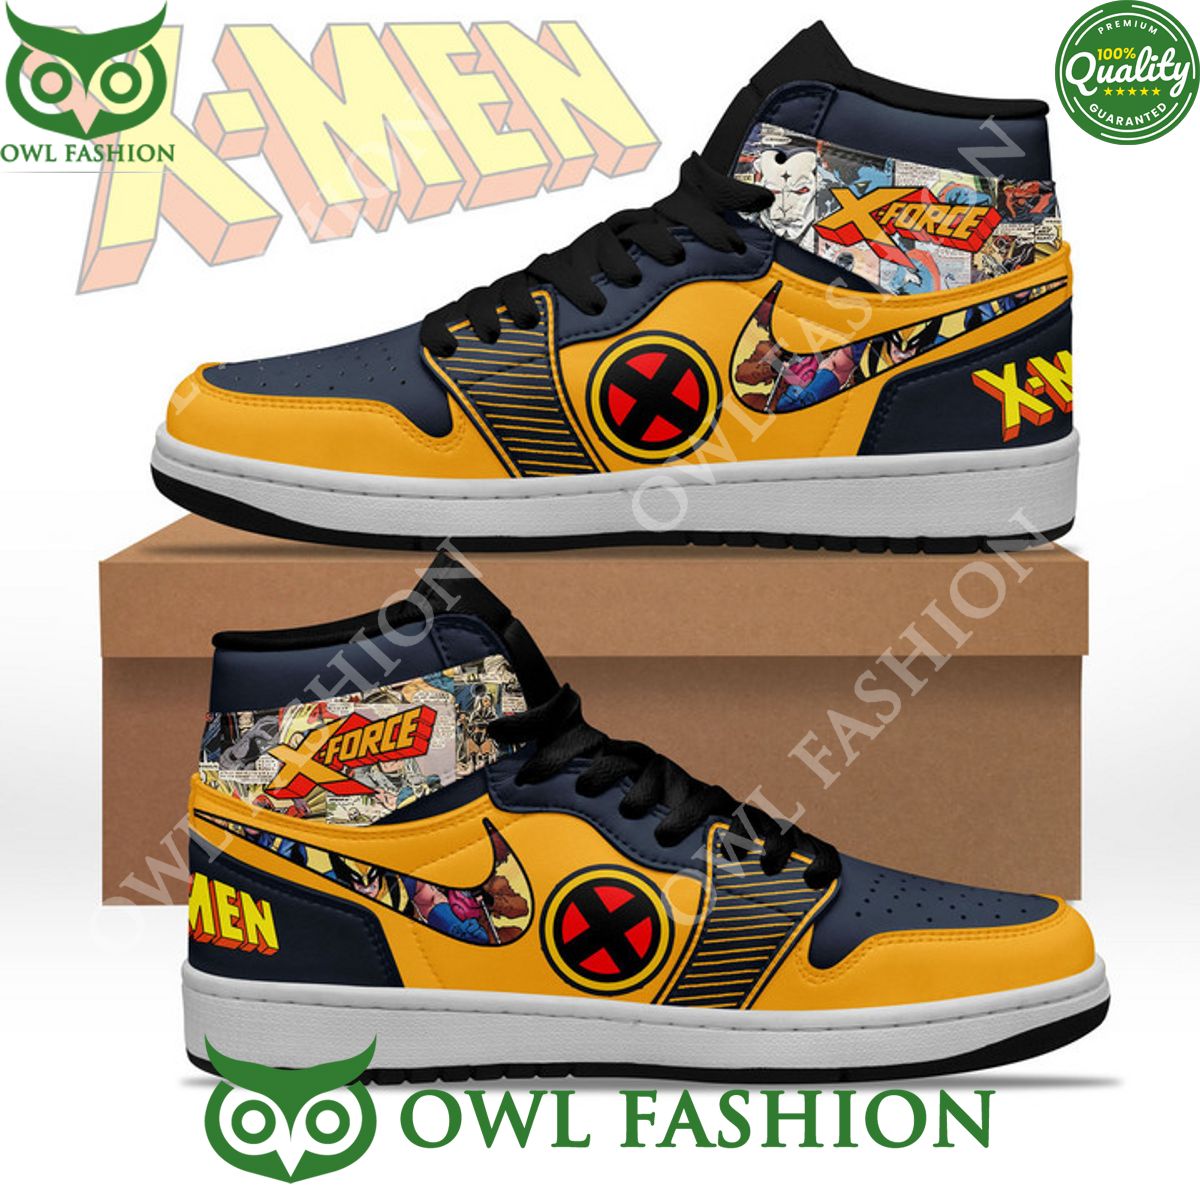 Premium X Men X force Wolverine Air Jordan High Top Sneaker Boots